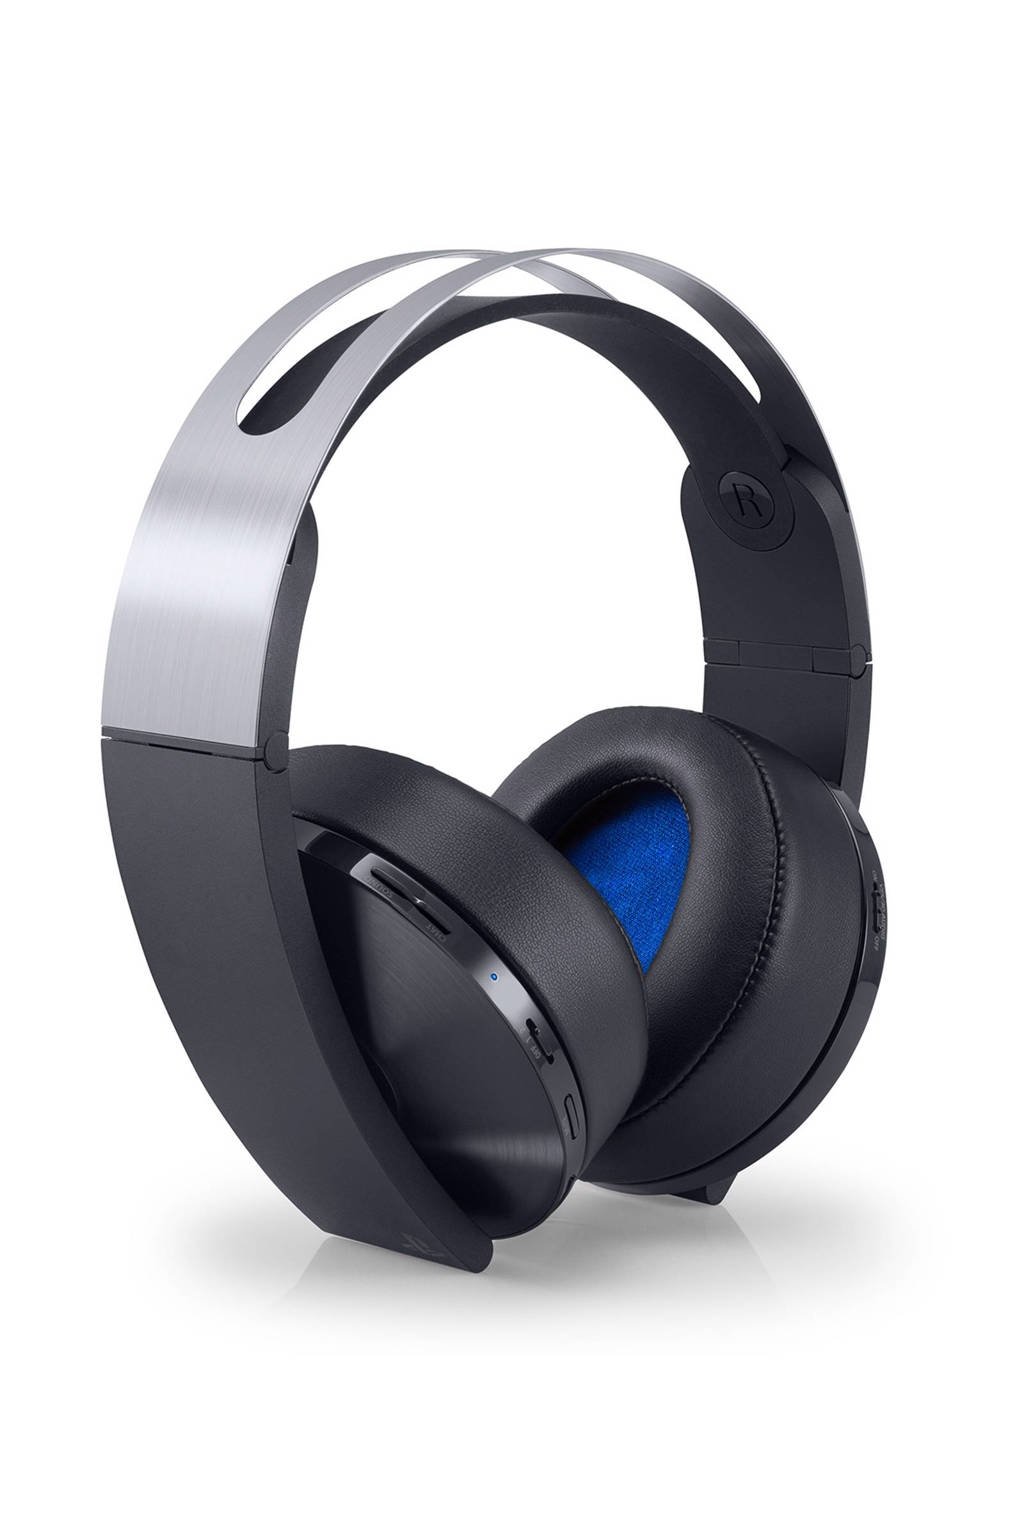 Doe herleven Roeispaan kaart PlayStation 4 Sony PlayStation 4 platinum draadloze headset | wehkamp